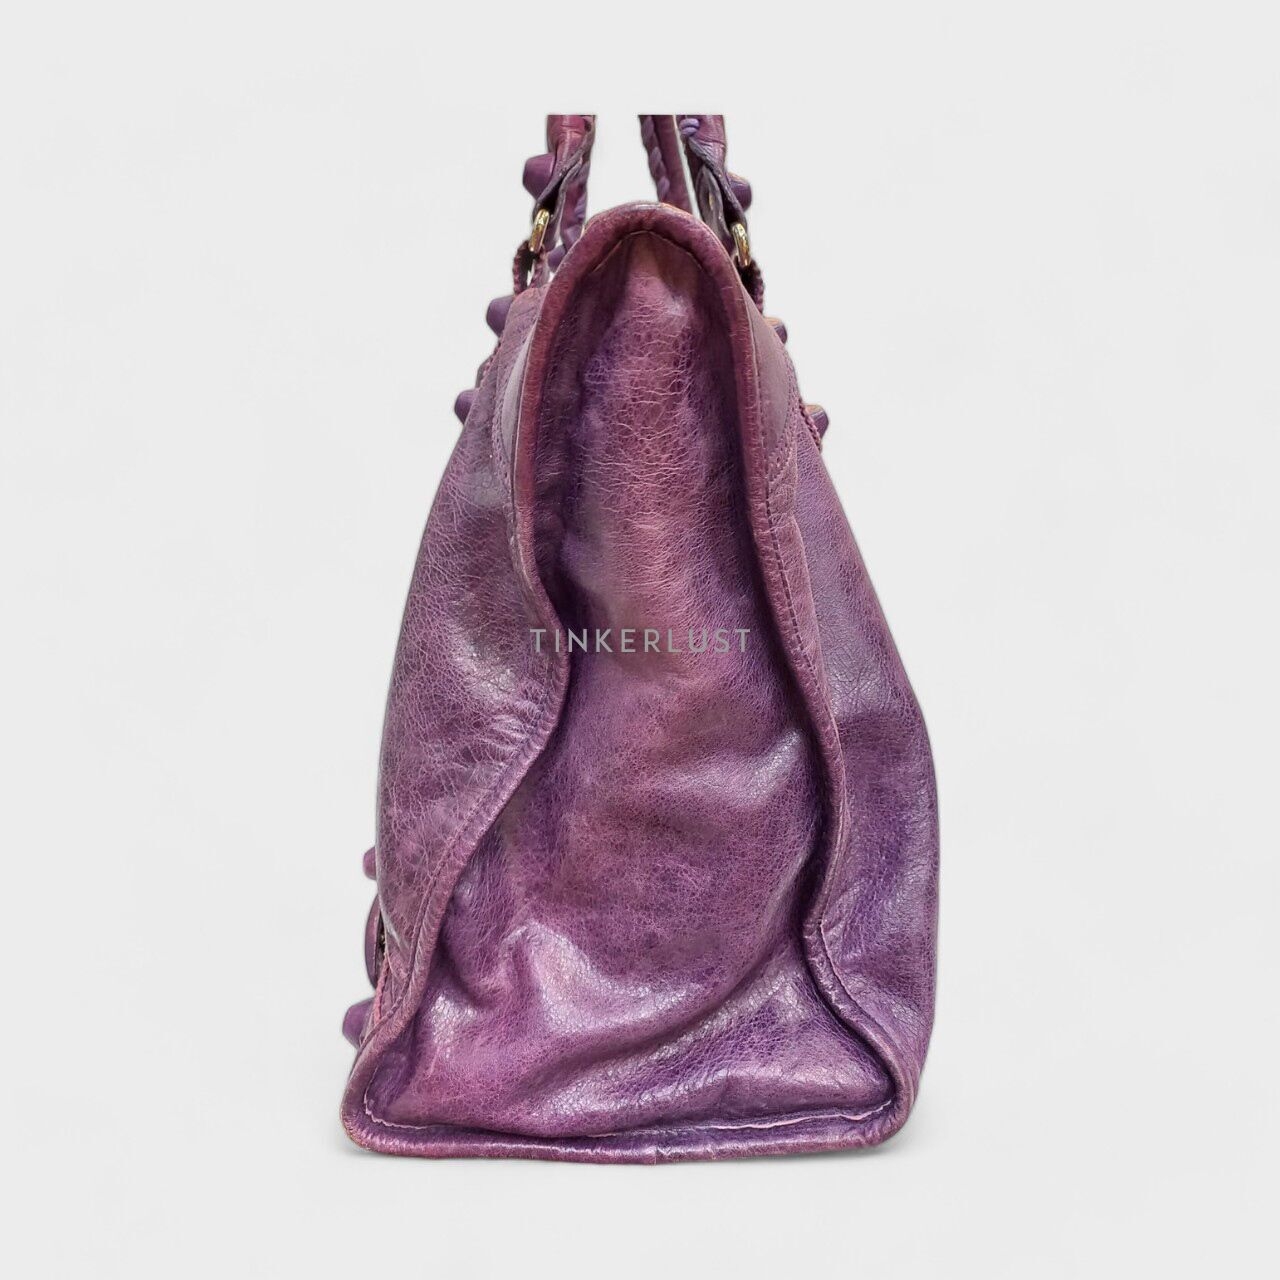 Balenciaga Giant Travel Bag Leather Purple Satchel